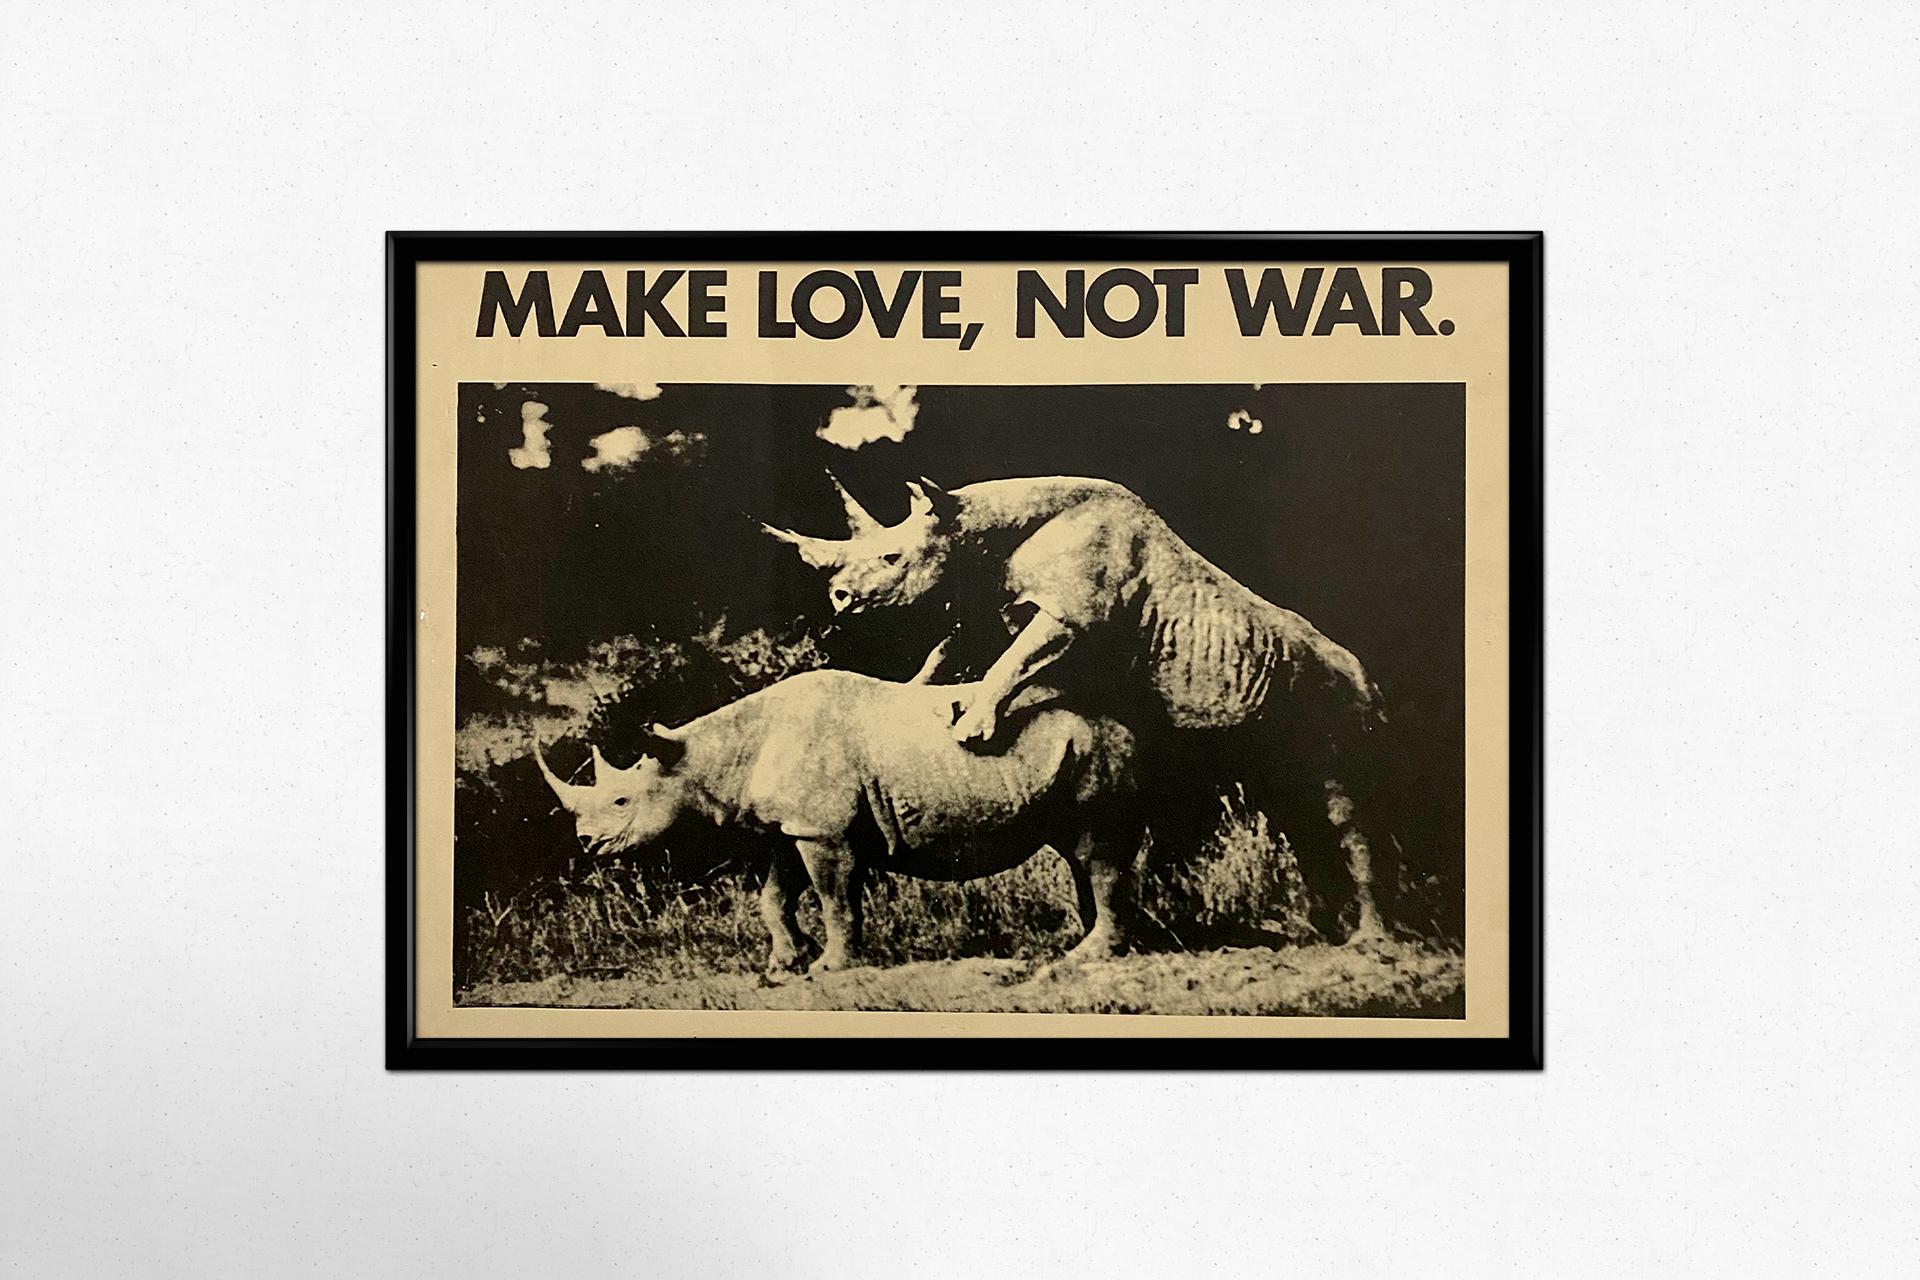 who said make love not war